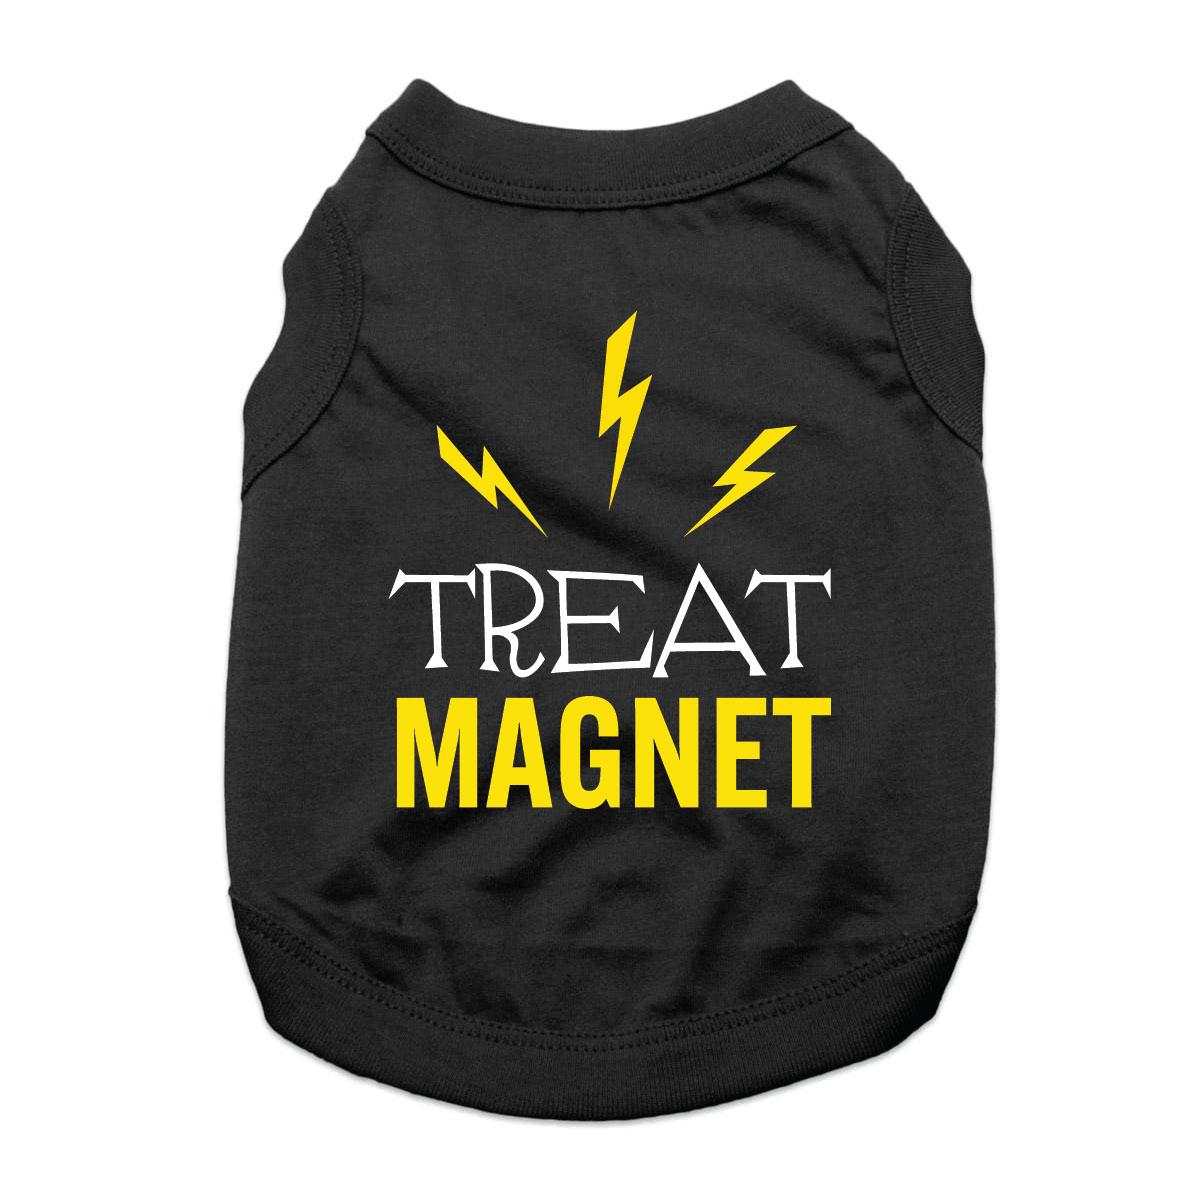 Treat Magnet Dog Shirt - Black